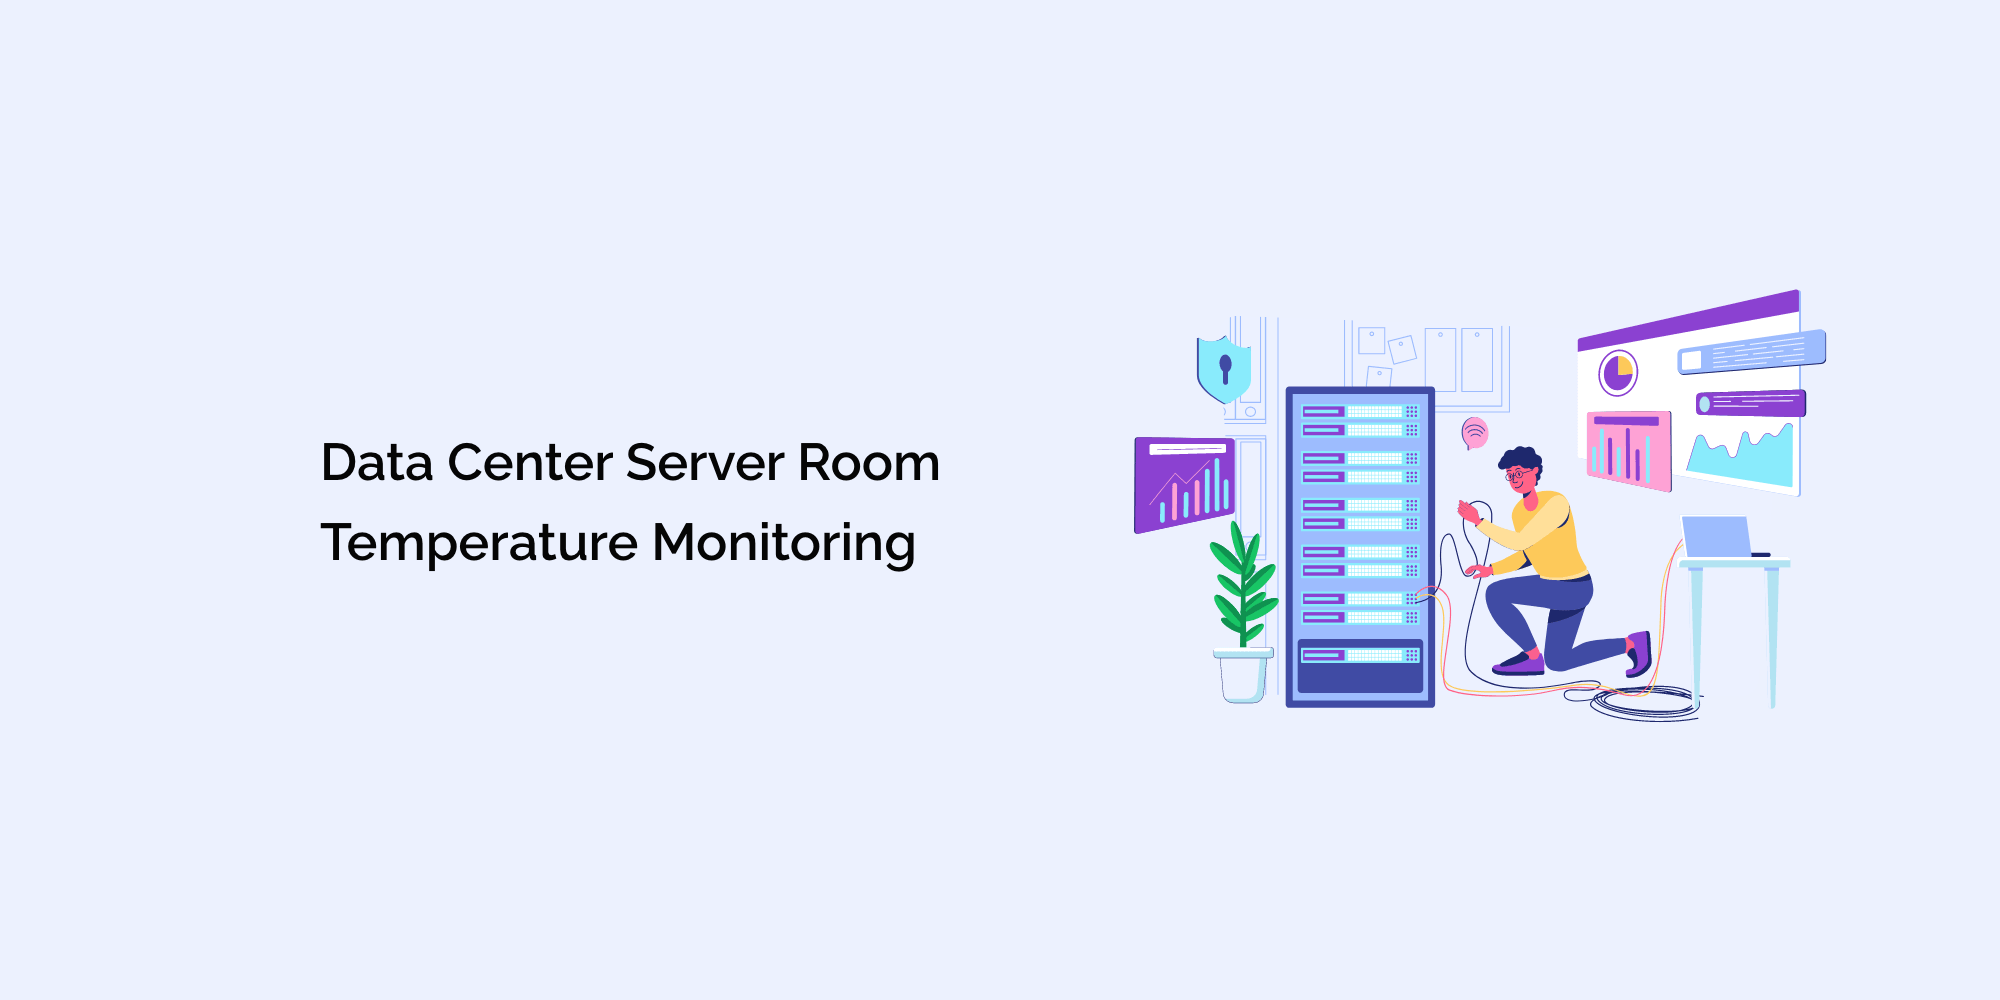 Data Center Server Room Temperature Monitoring: Proactive vs. Reactive Approaches